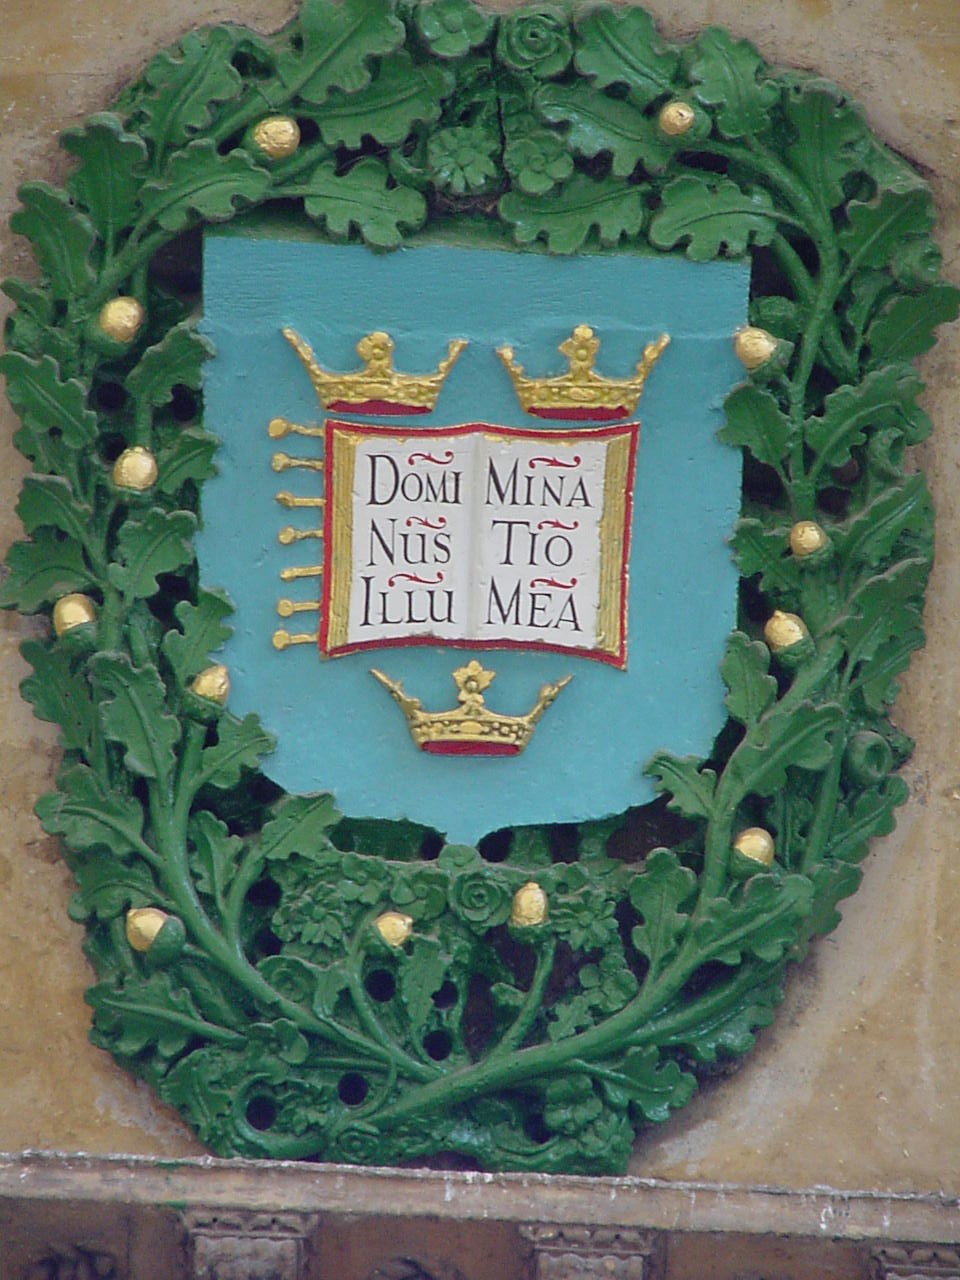 picture of Oxford motto